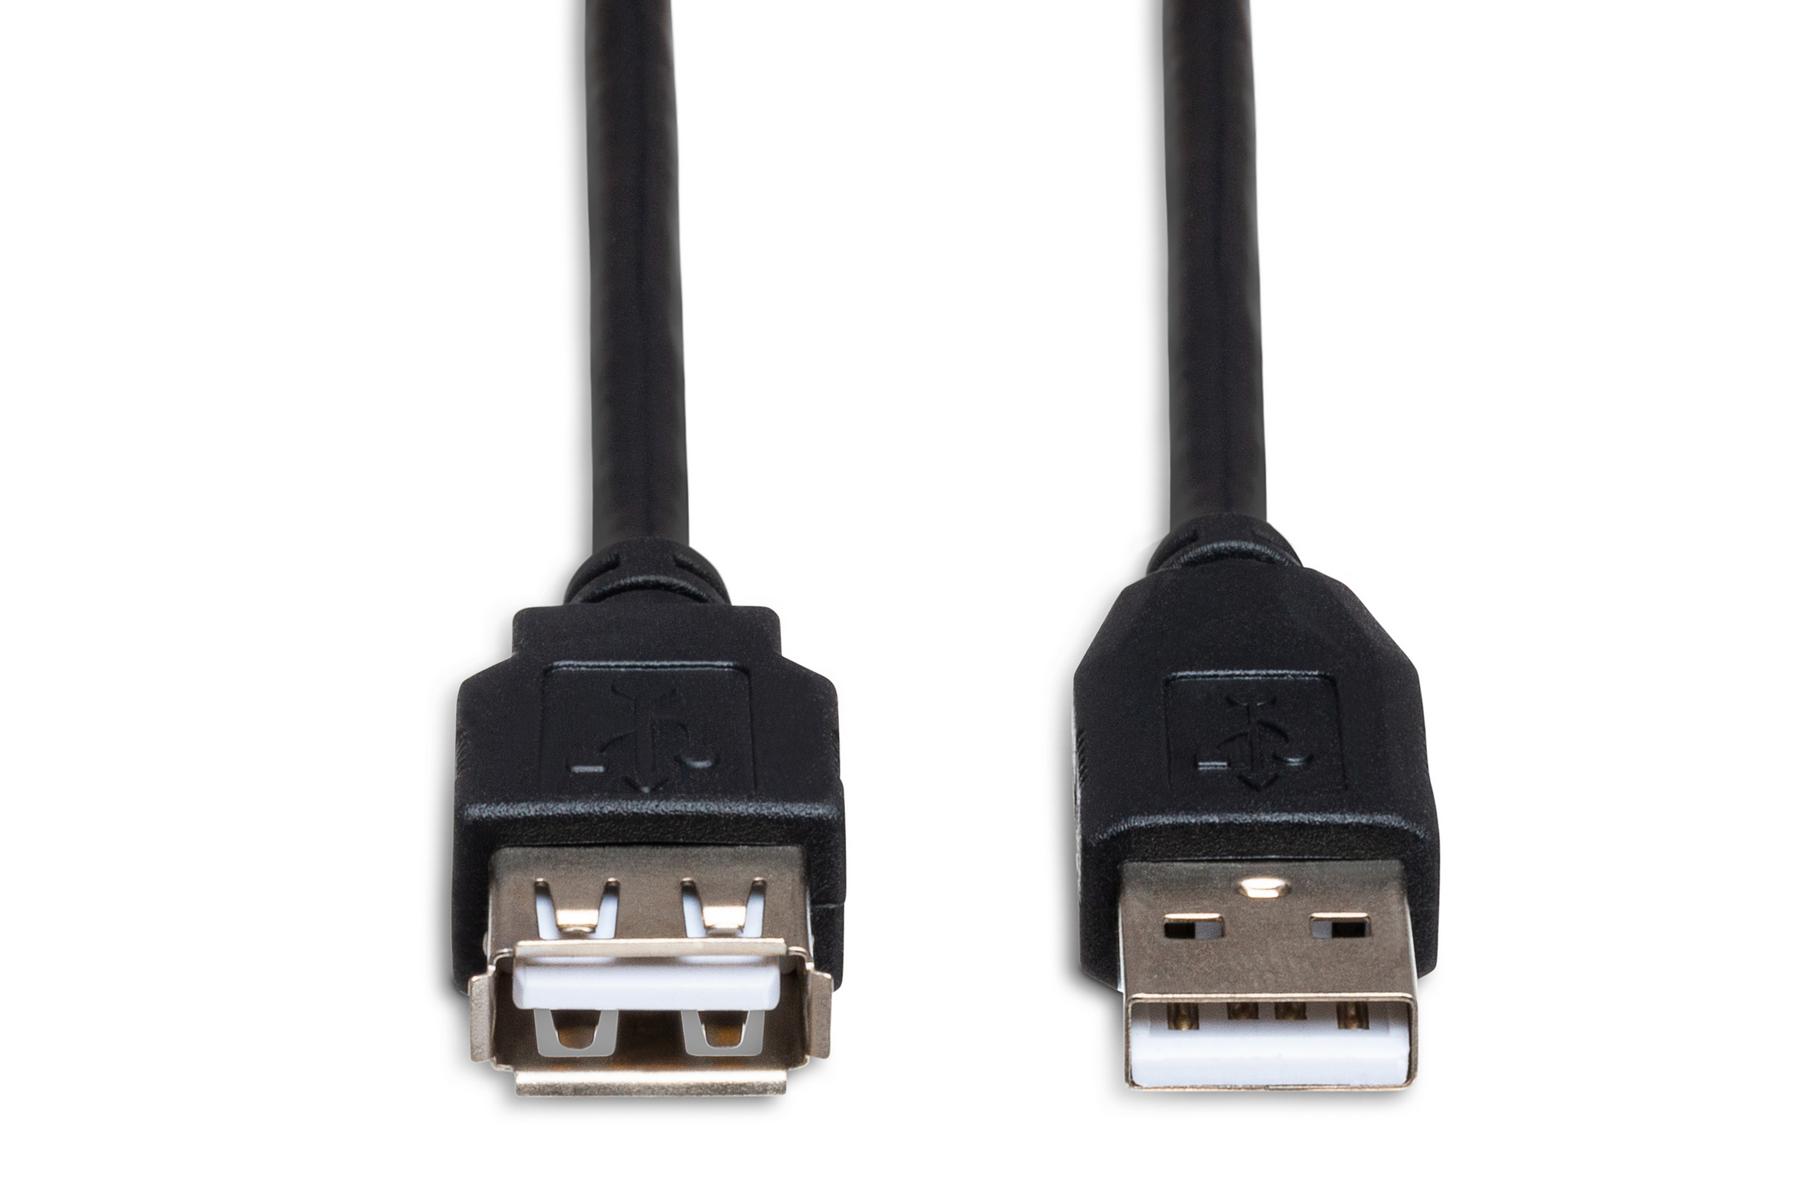 Extension USB 2.0 Macho-Hembra 5M Mindpure LX10253 3MG – Sycom Honduras